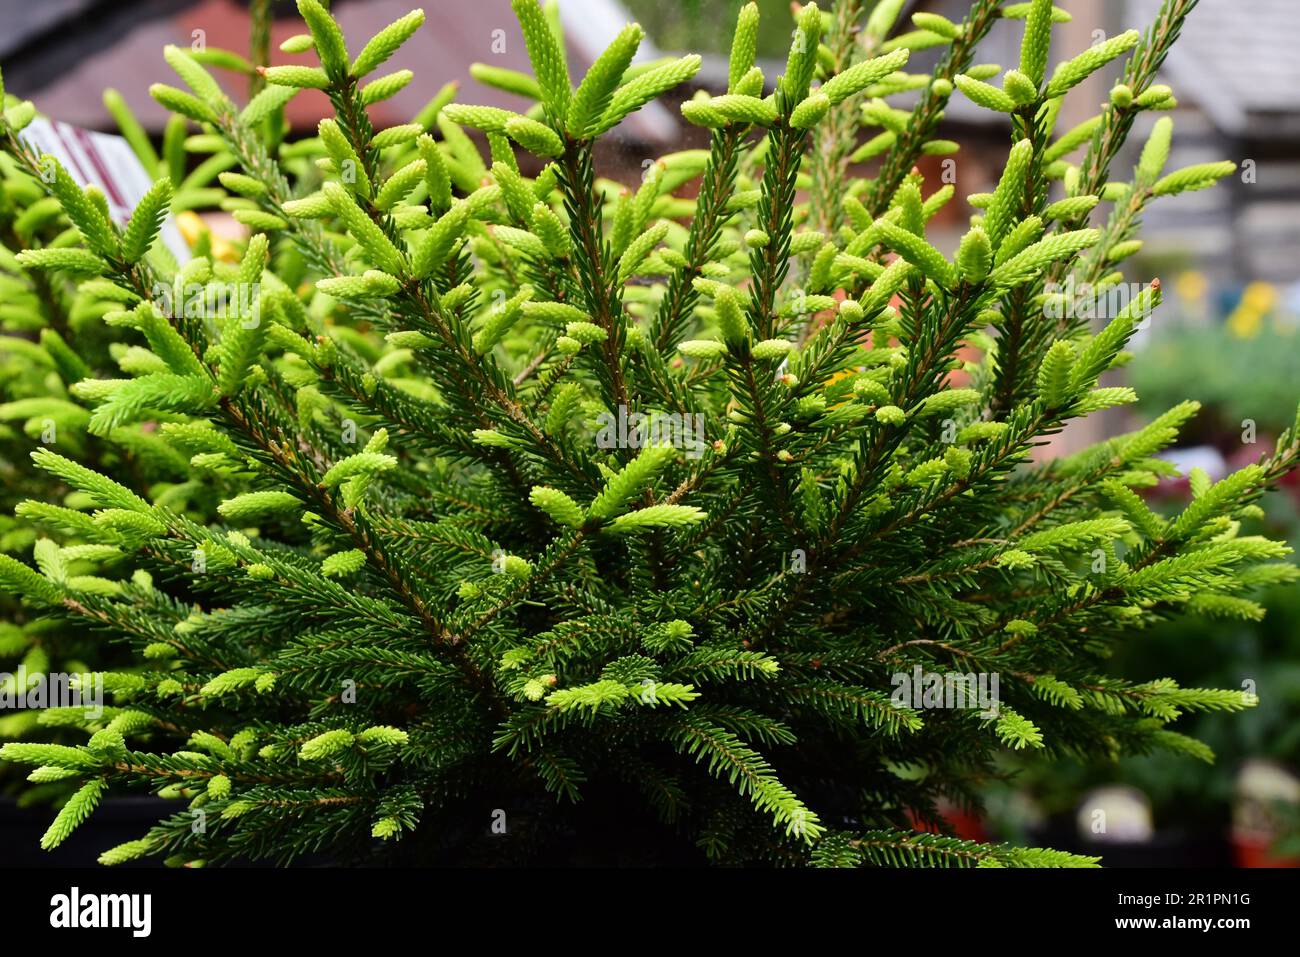 A mature Barnes Oriental Spruce tree (Picea orientalis) in a garden Stock Photo